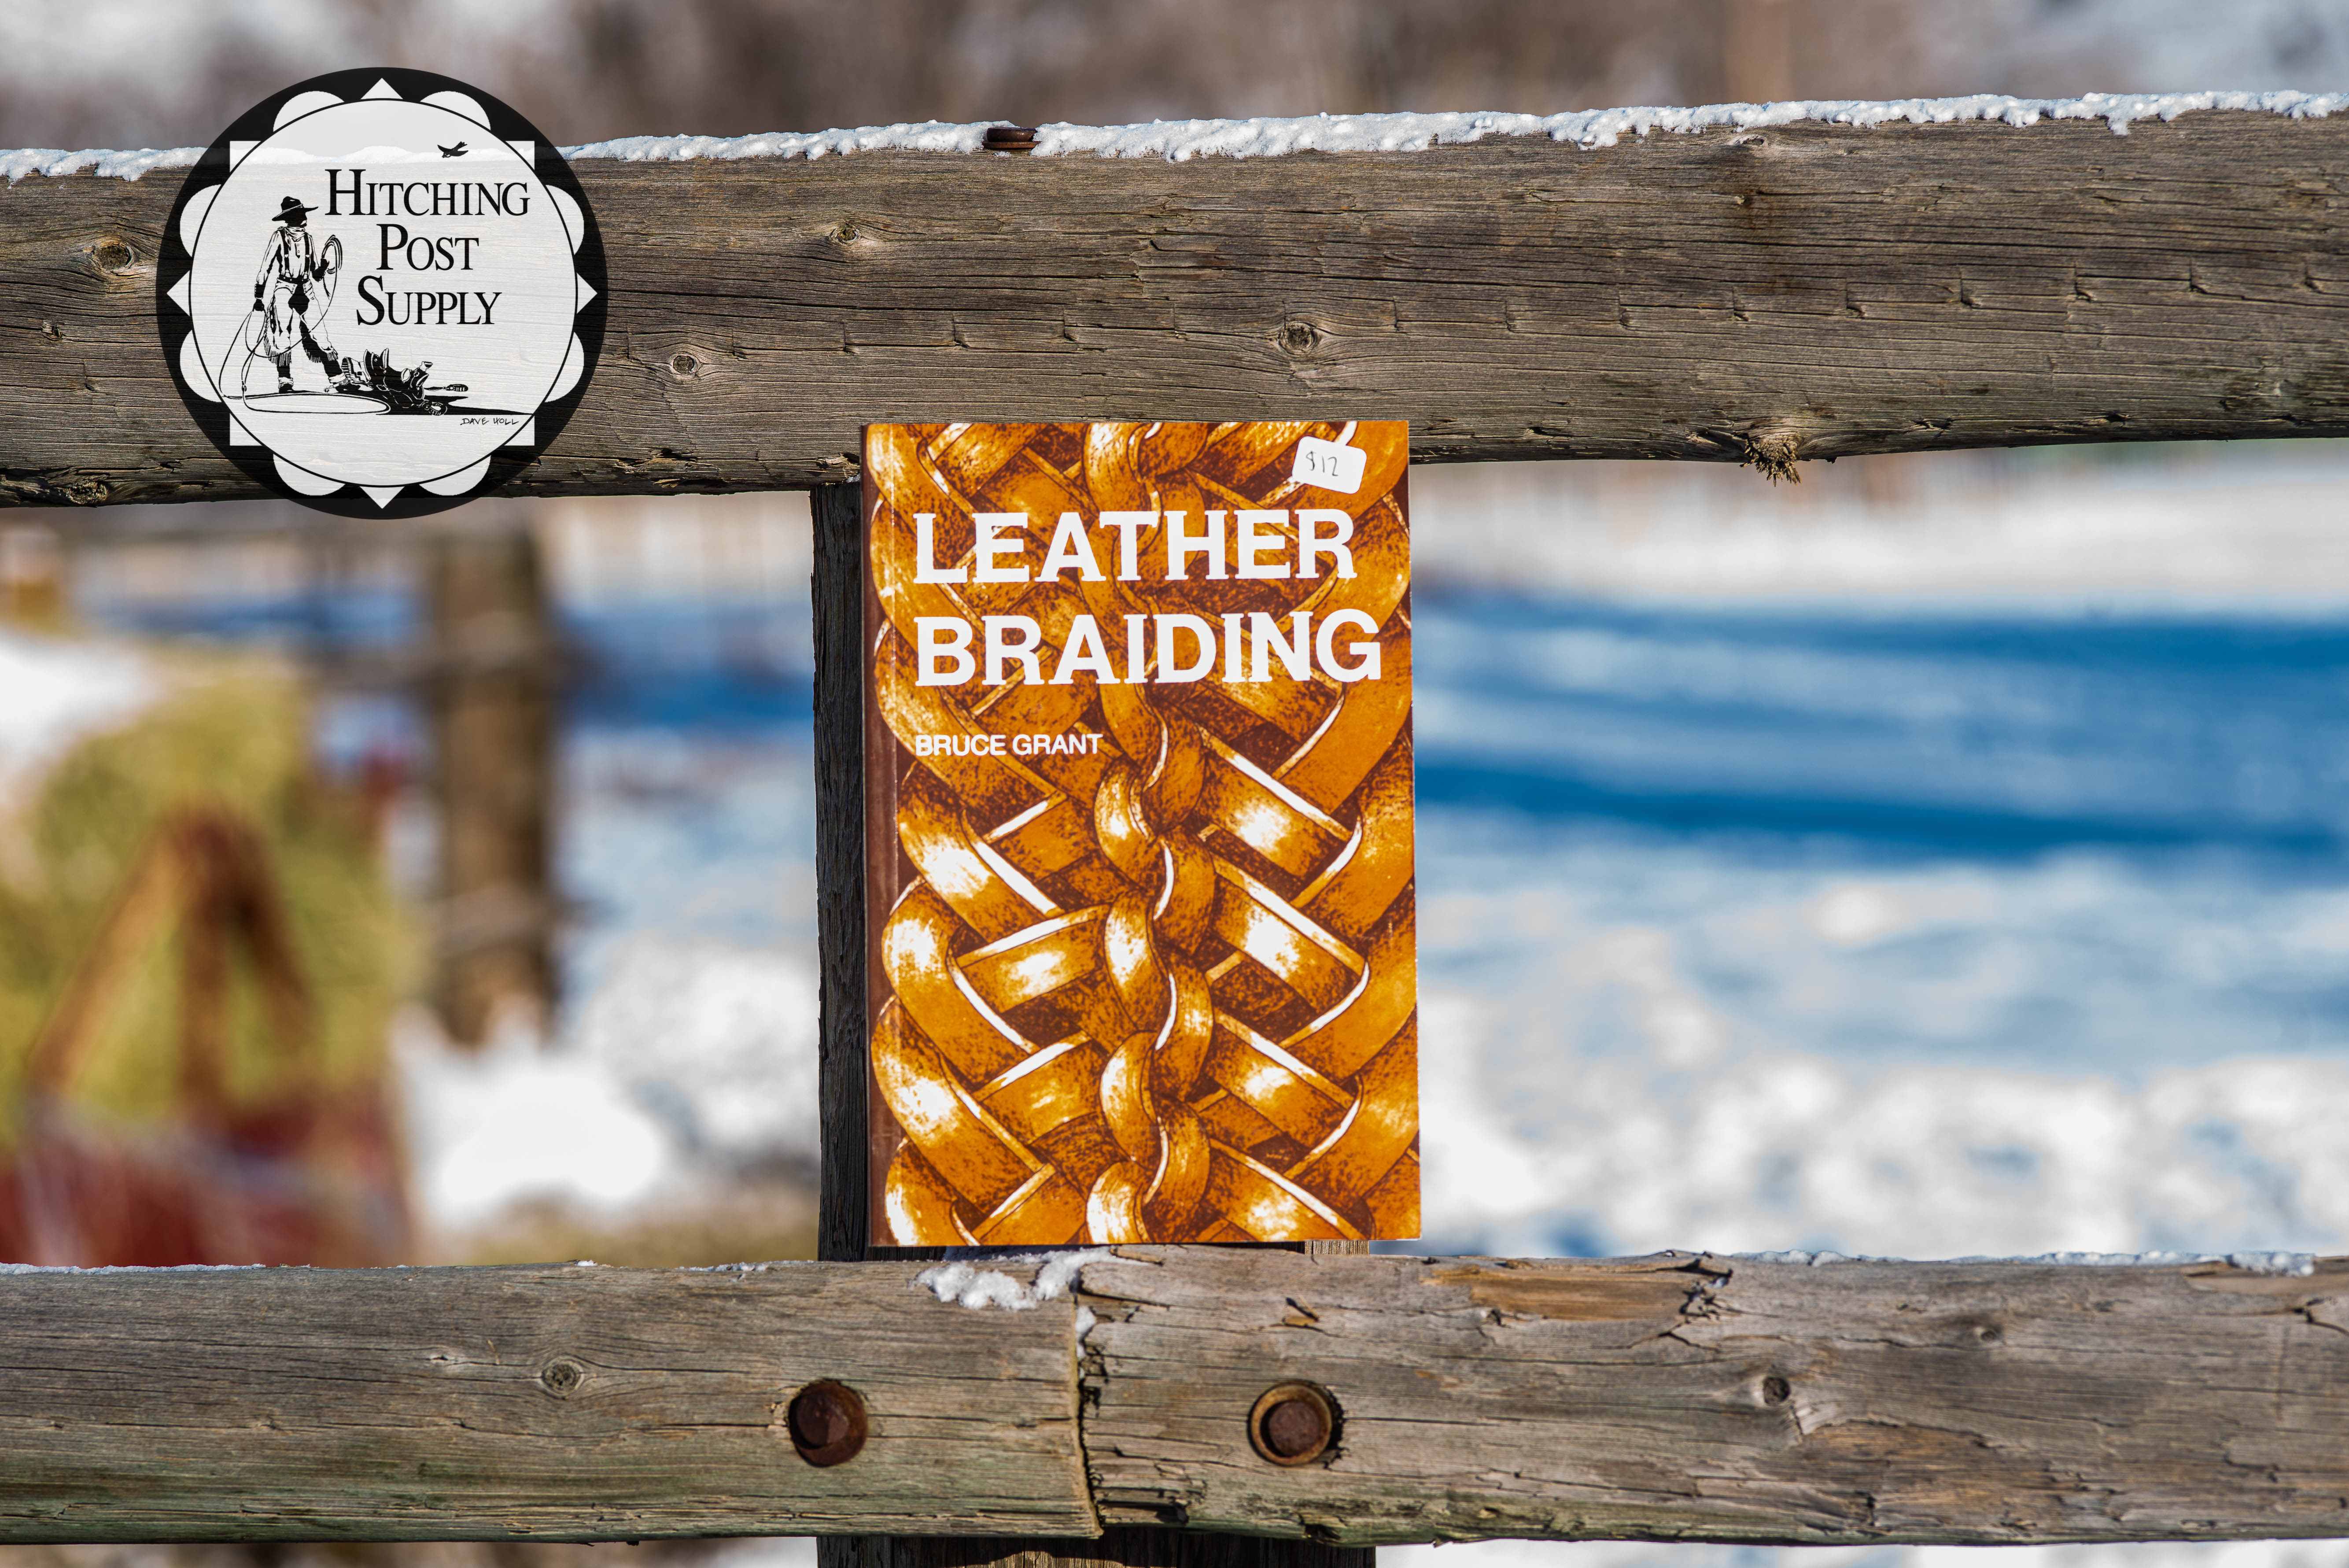 Braiding Fine Leather Techniques of the Australian 